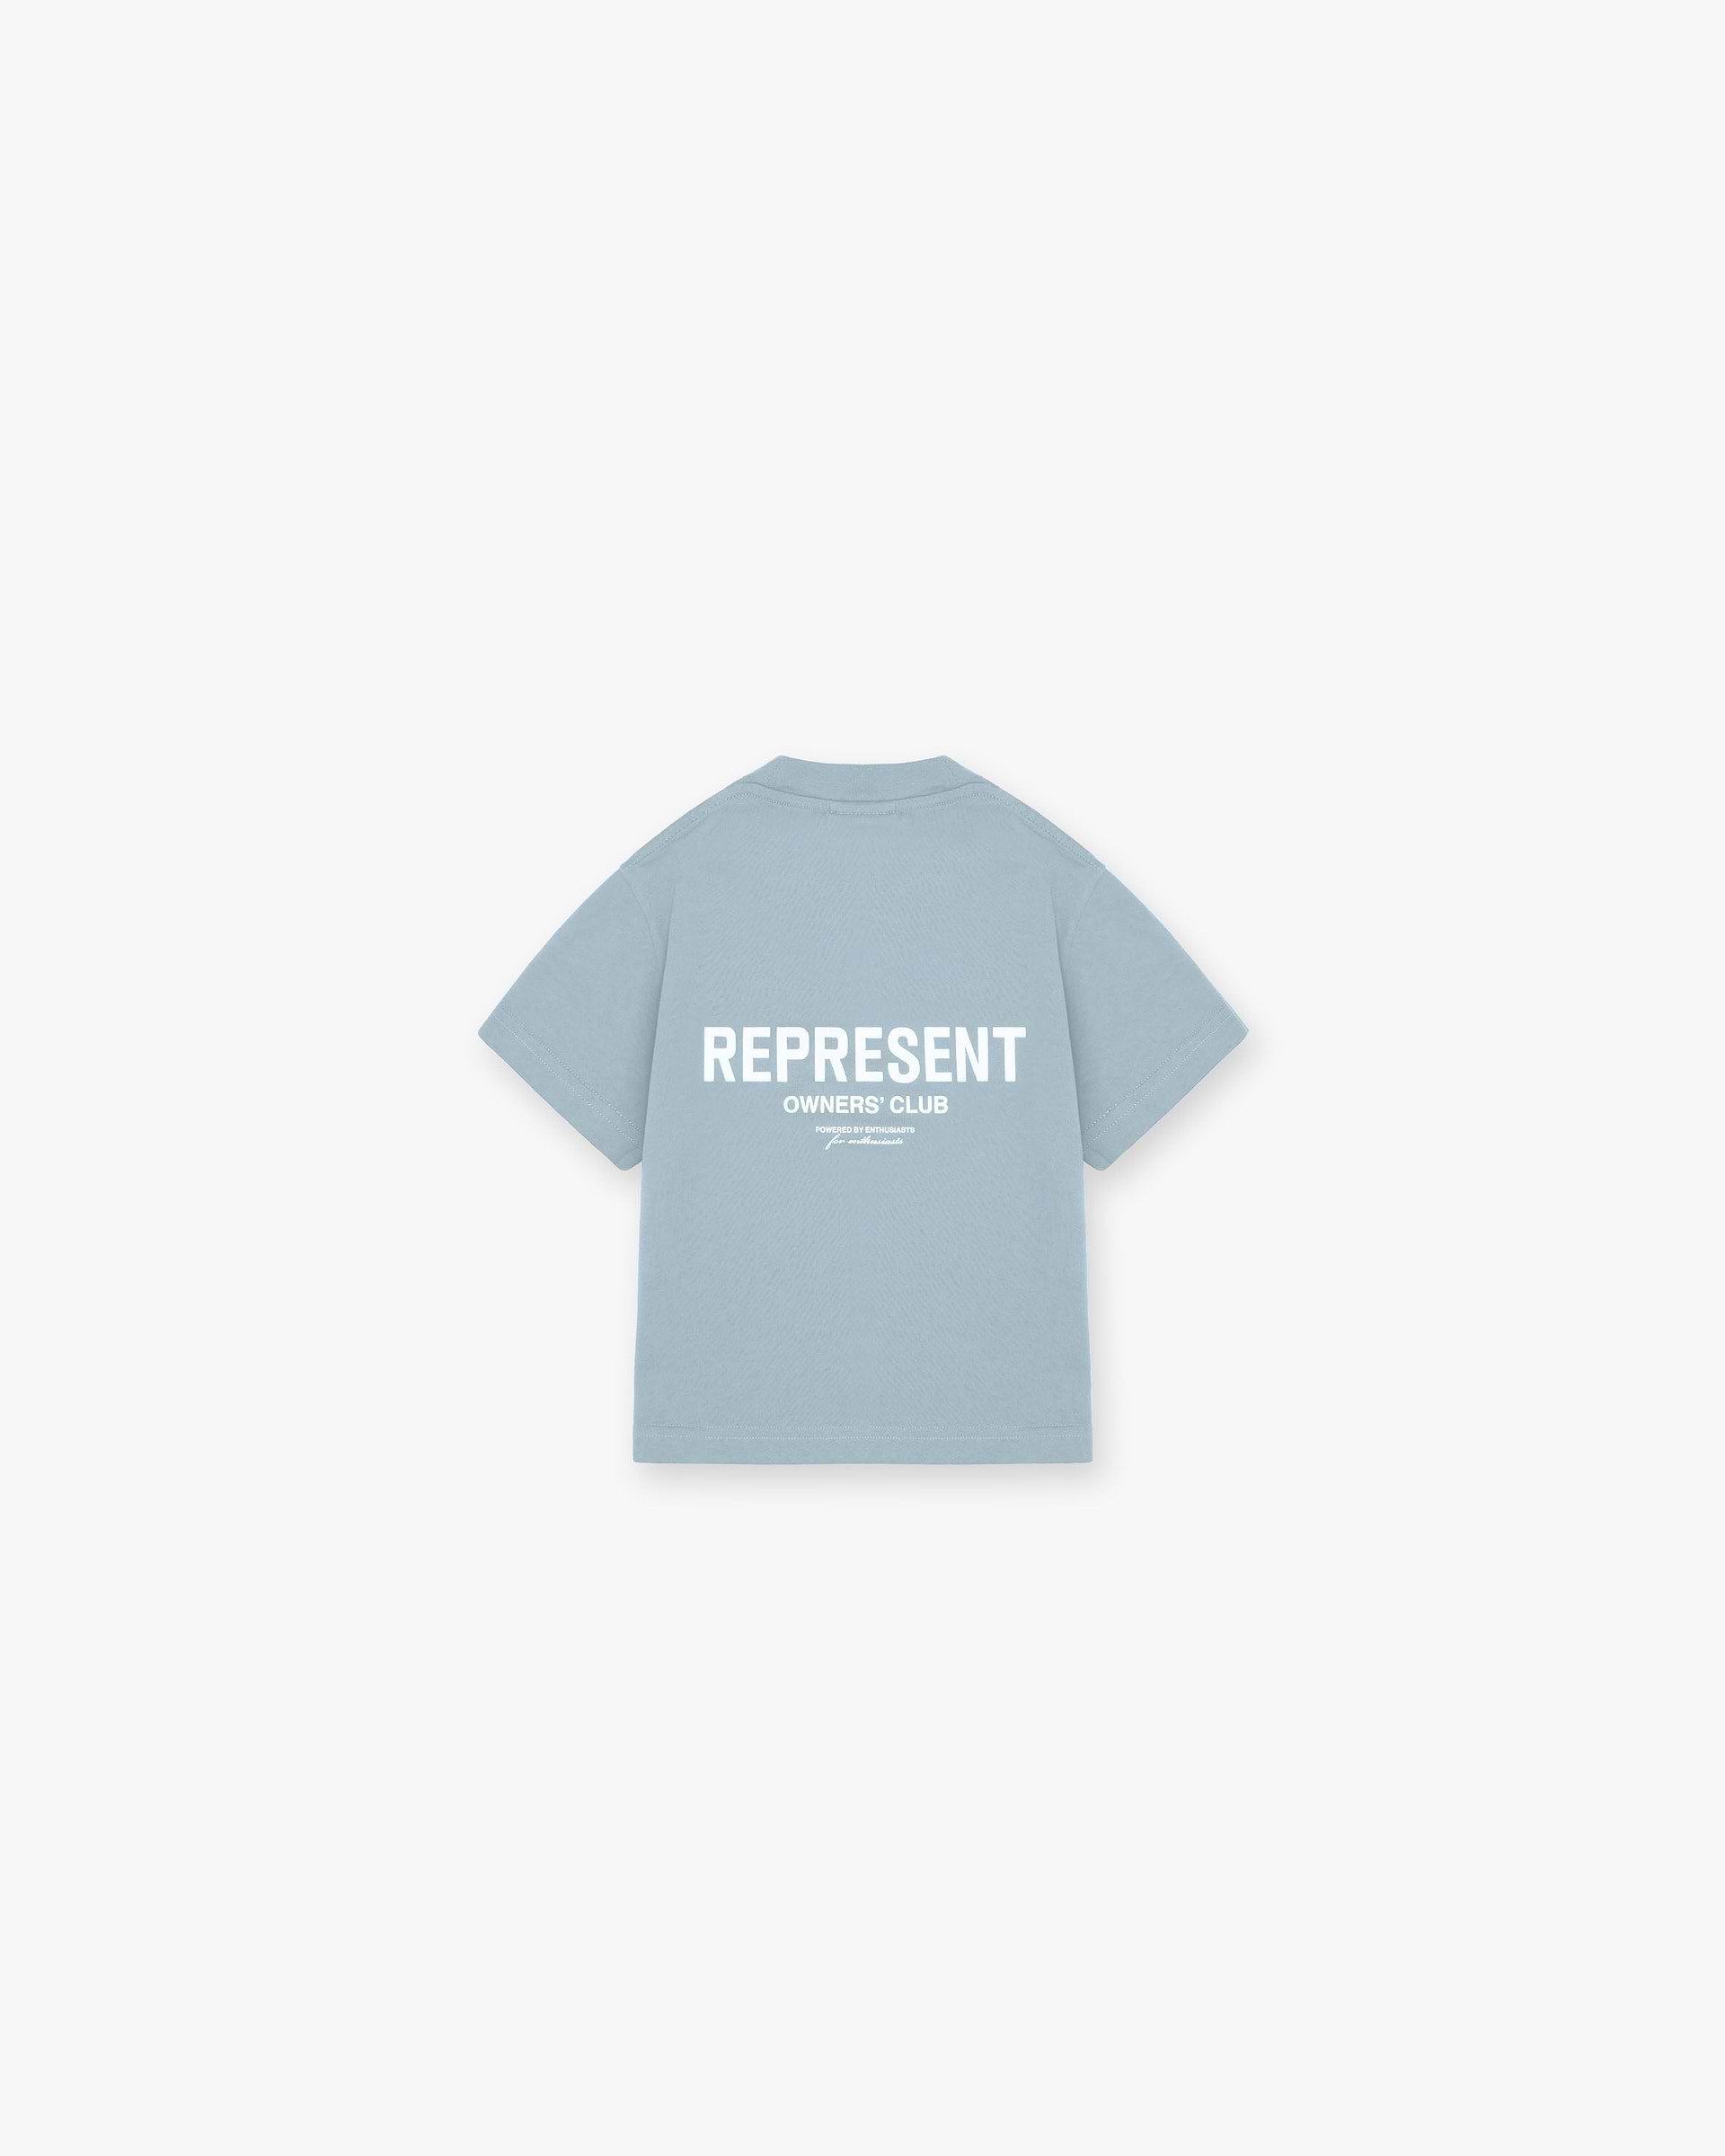 Represent Mini Owners Club T-Shirt | Powder Blue T-Shirts Owners Club | Represent Clo